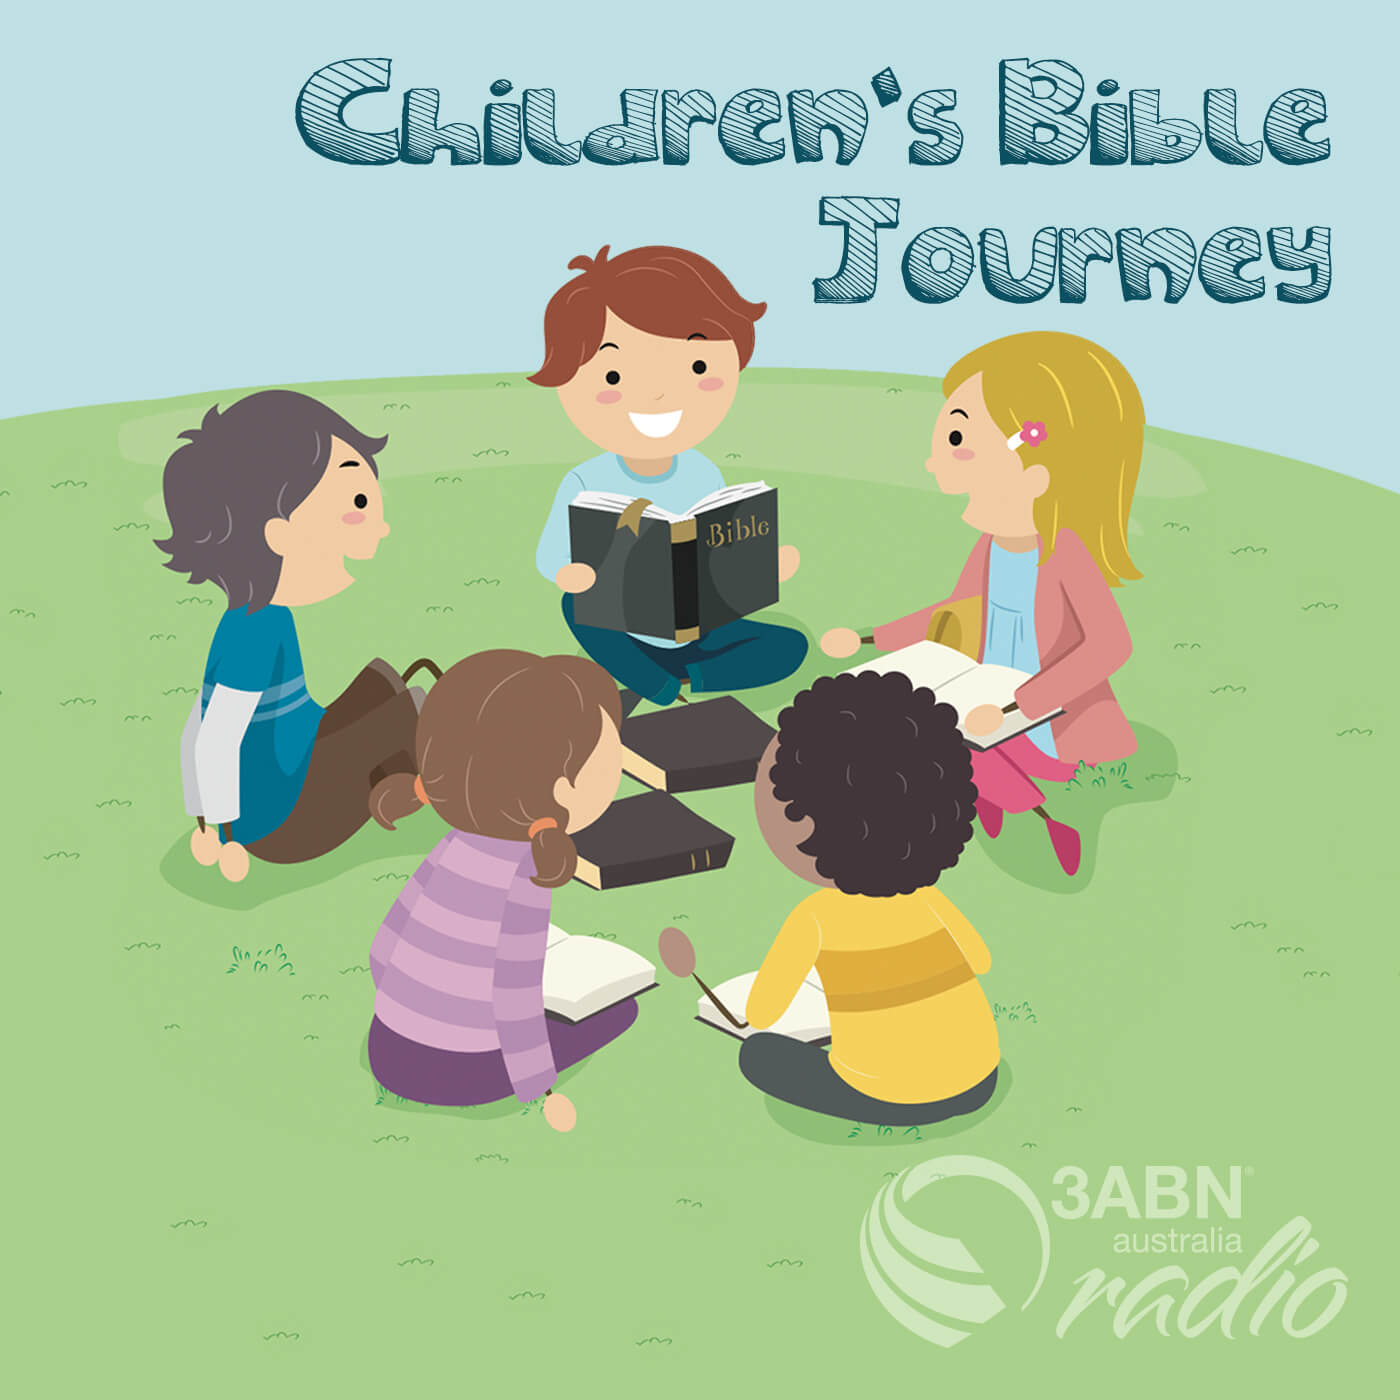 Children's Bible Journey - 2165